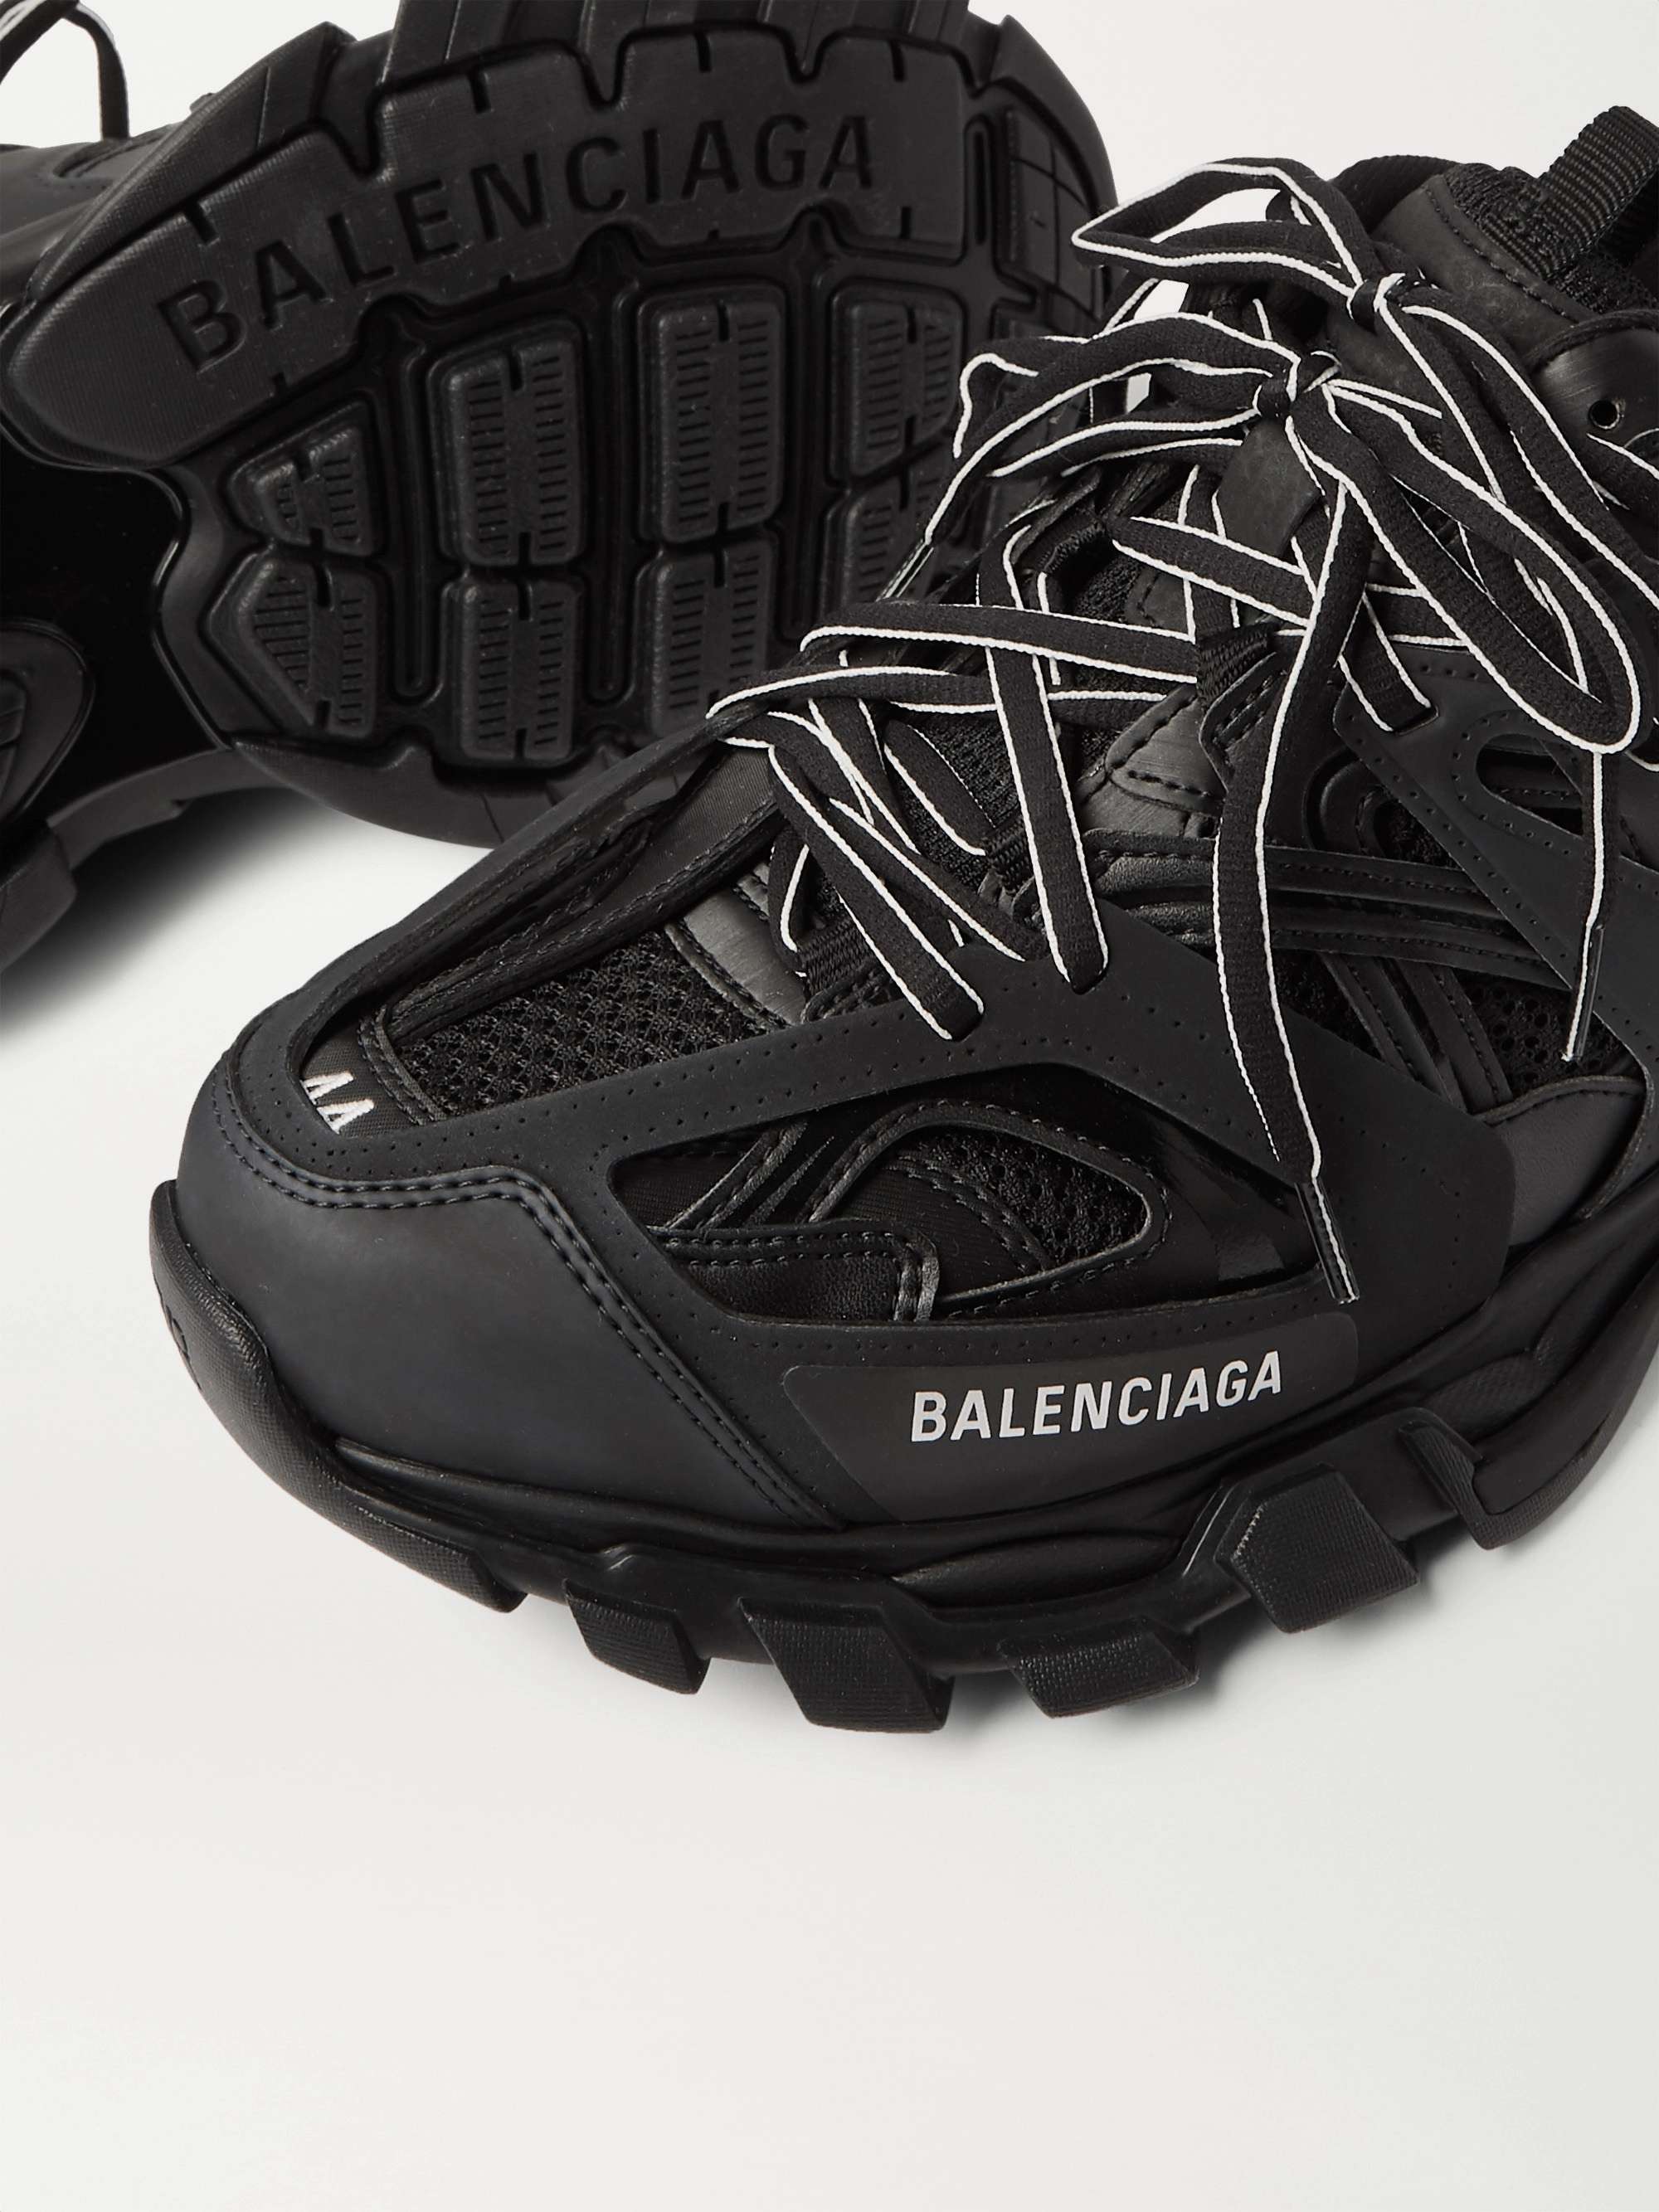 Balenciagas Sneakerhead Handbags Are Selling Out Fast  Grazia